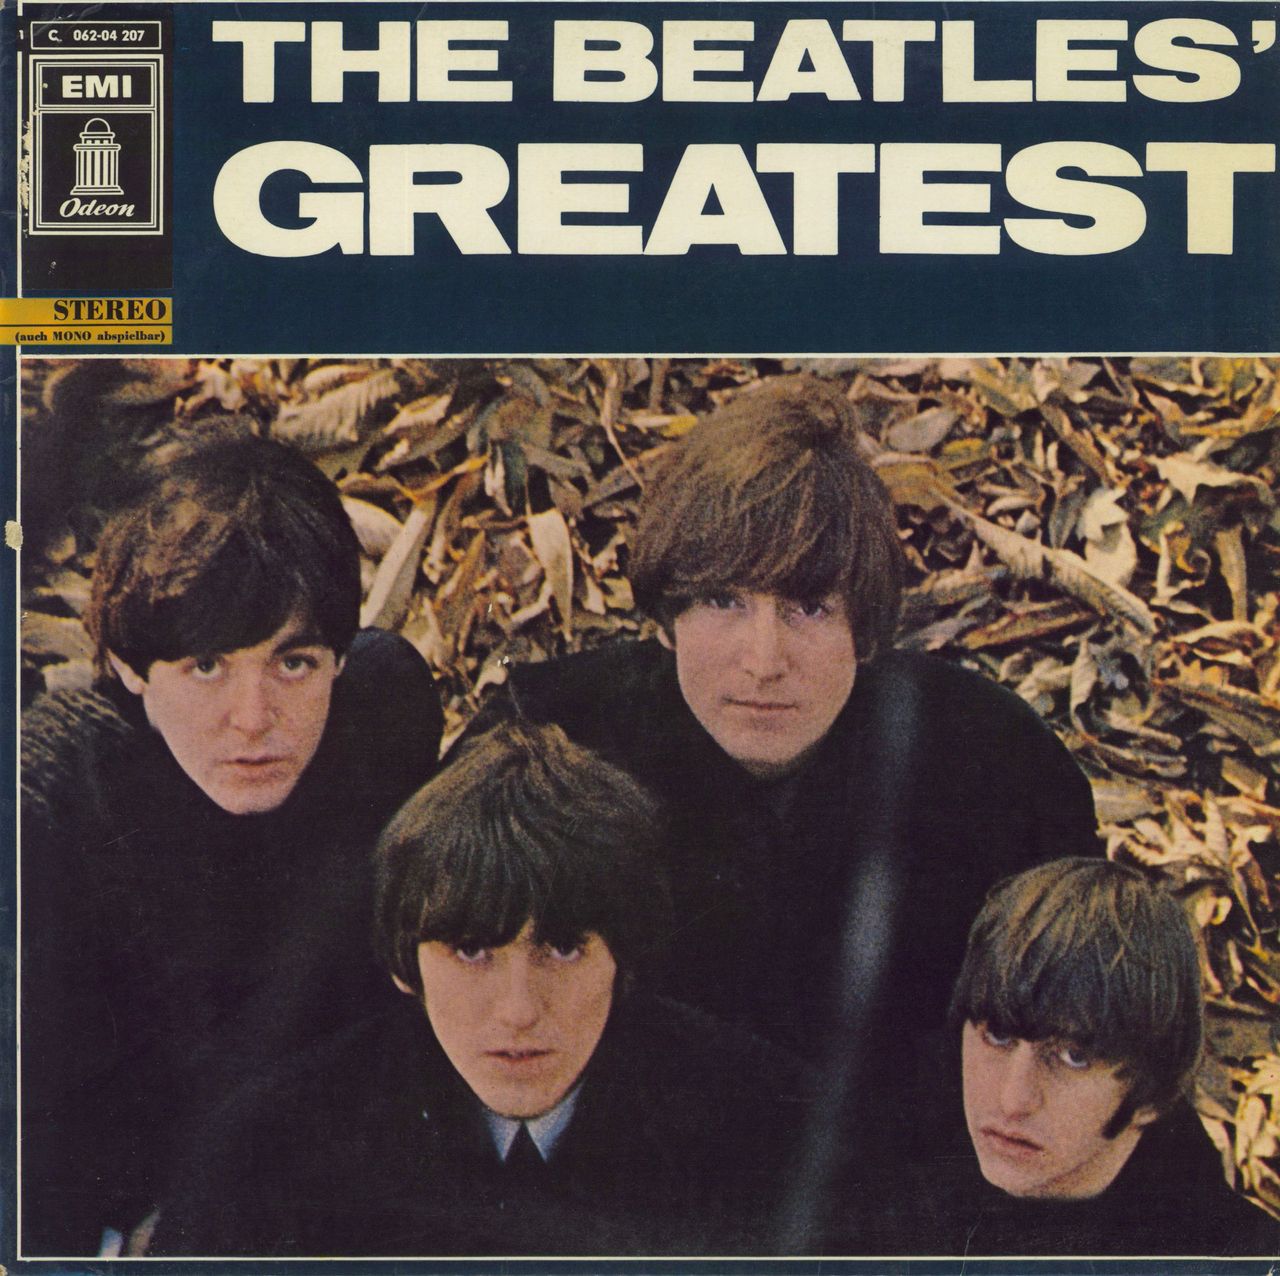 The Beatles The Beatles' Greatest - Blue Label - VG/EX German vinyl LP album (LP record) 1C062-04207